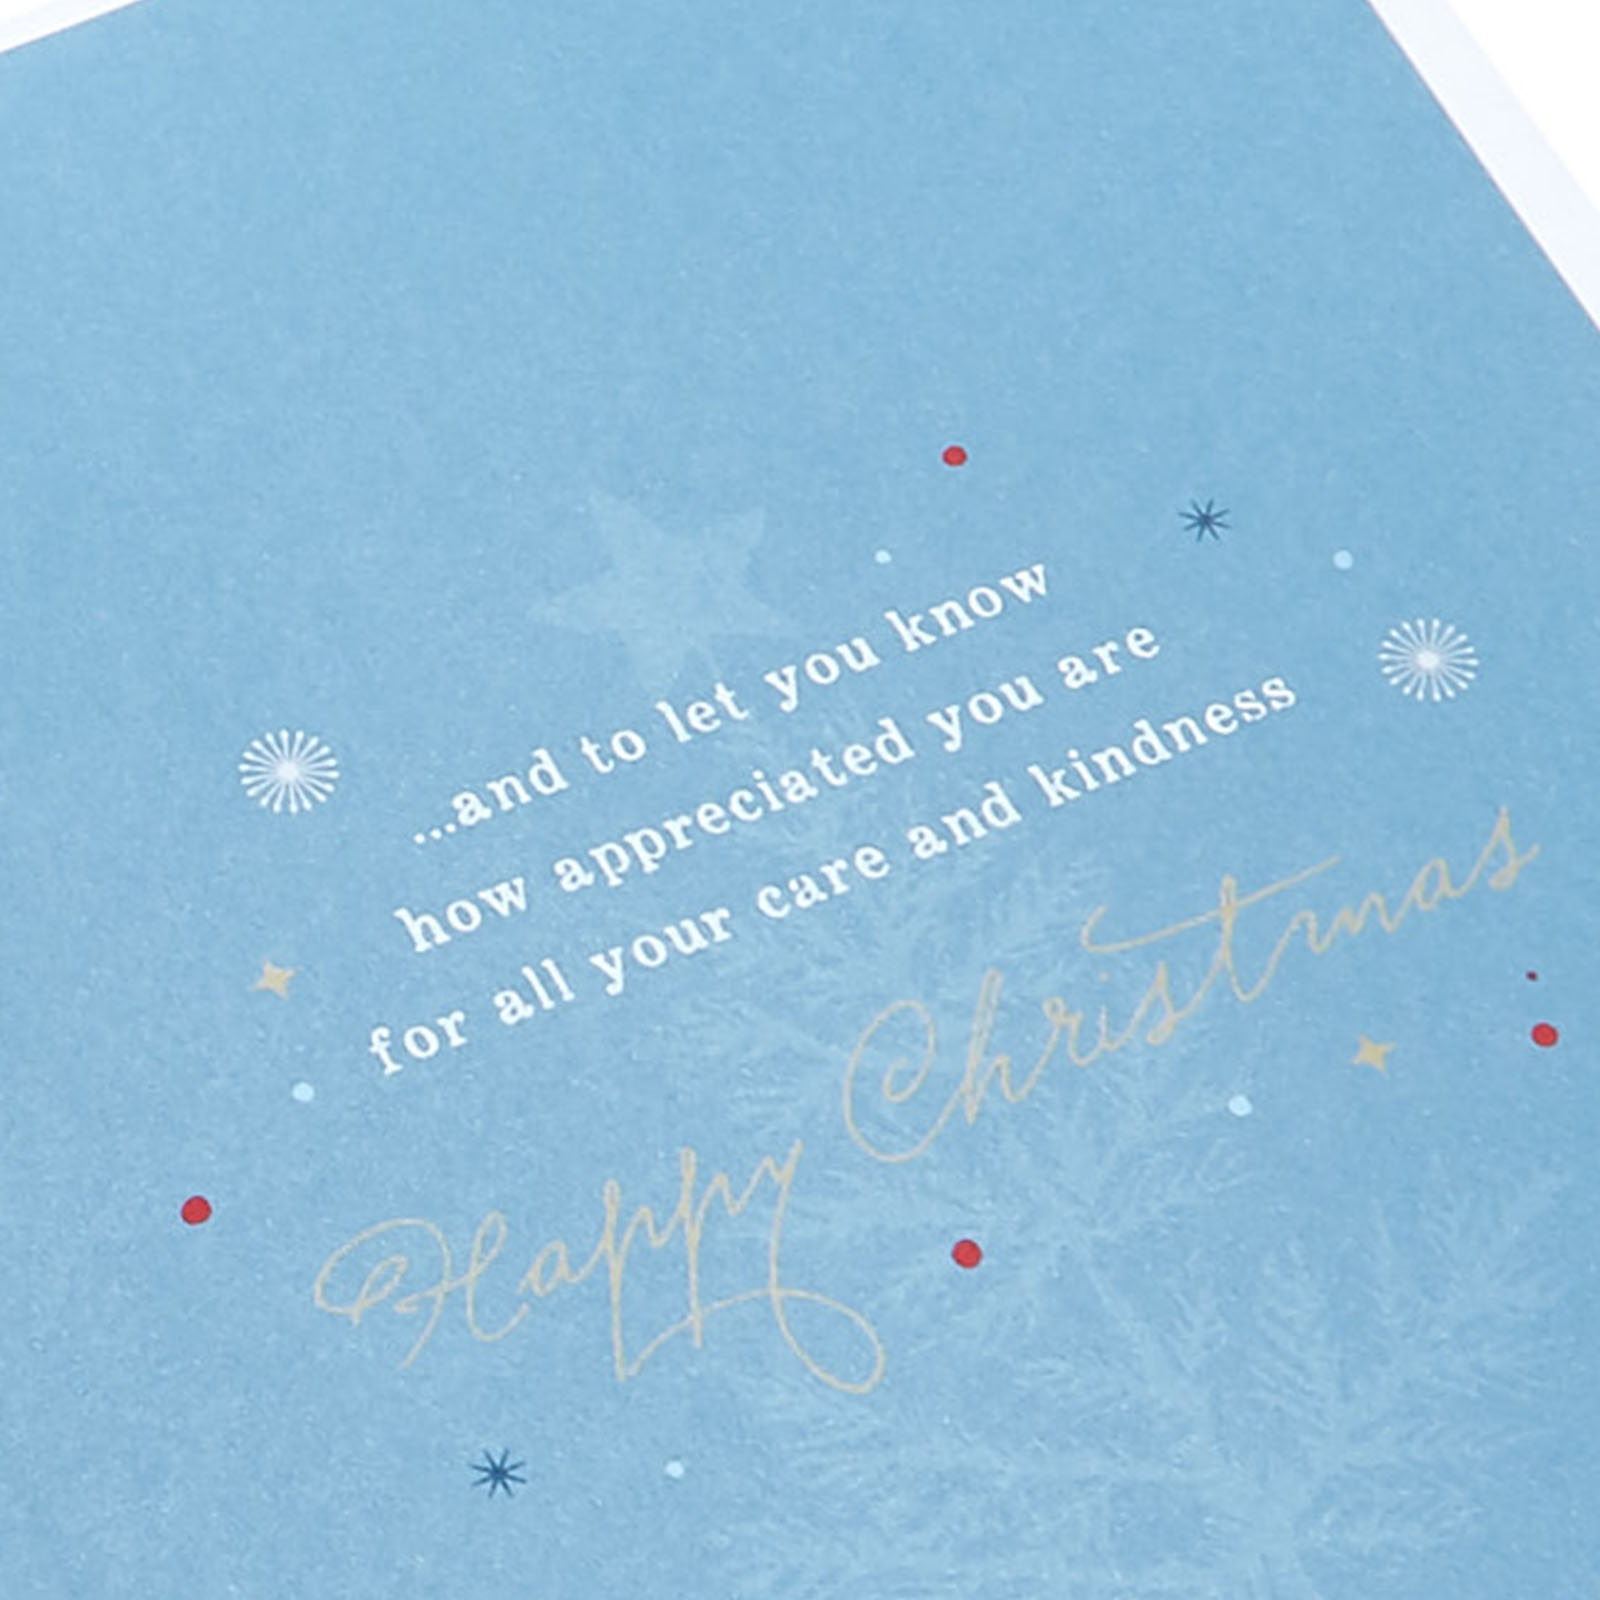 Christmas Card - Thank You Wonderful Carer 